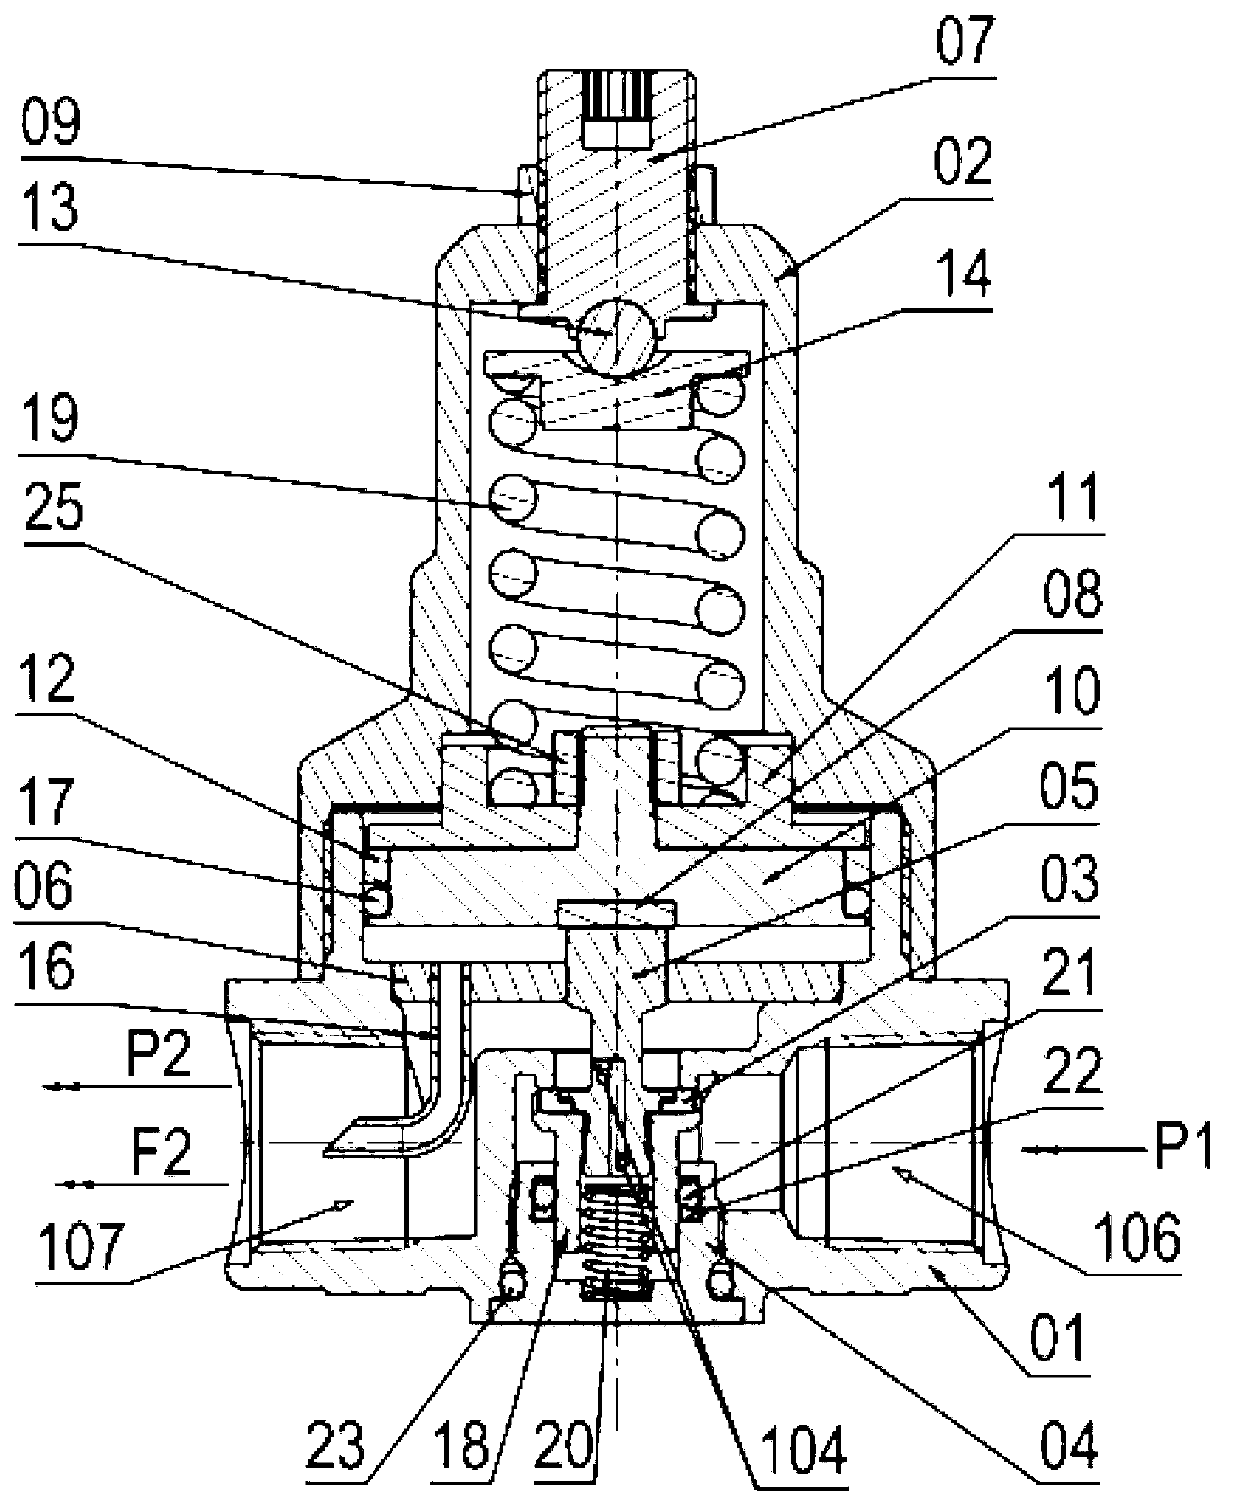 Mass-flow balanced type pressure regulating valve